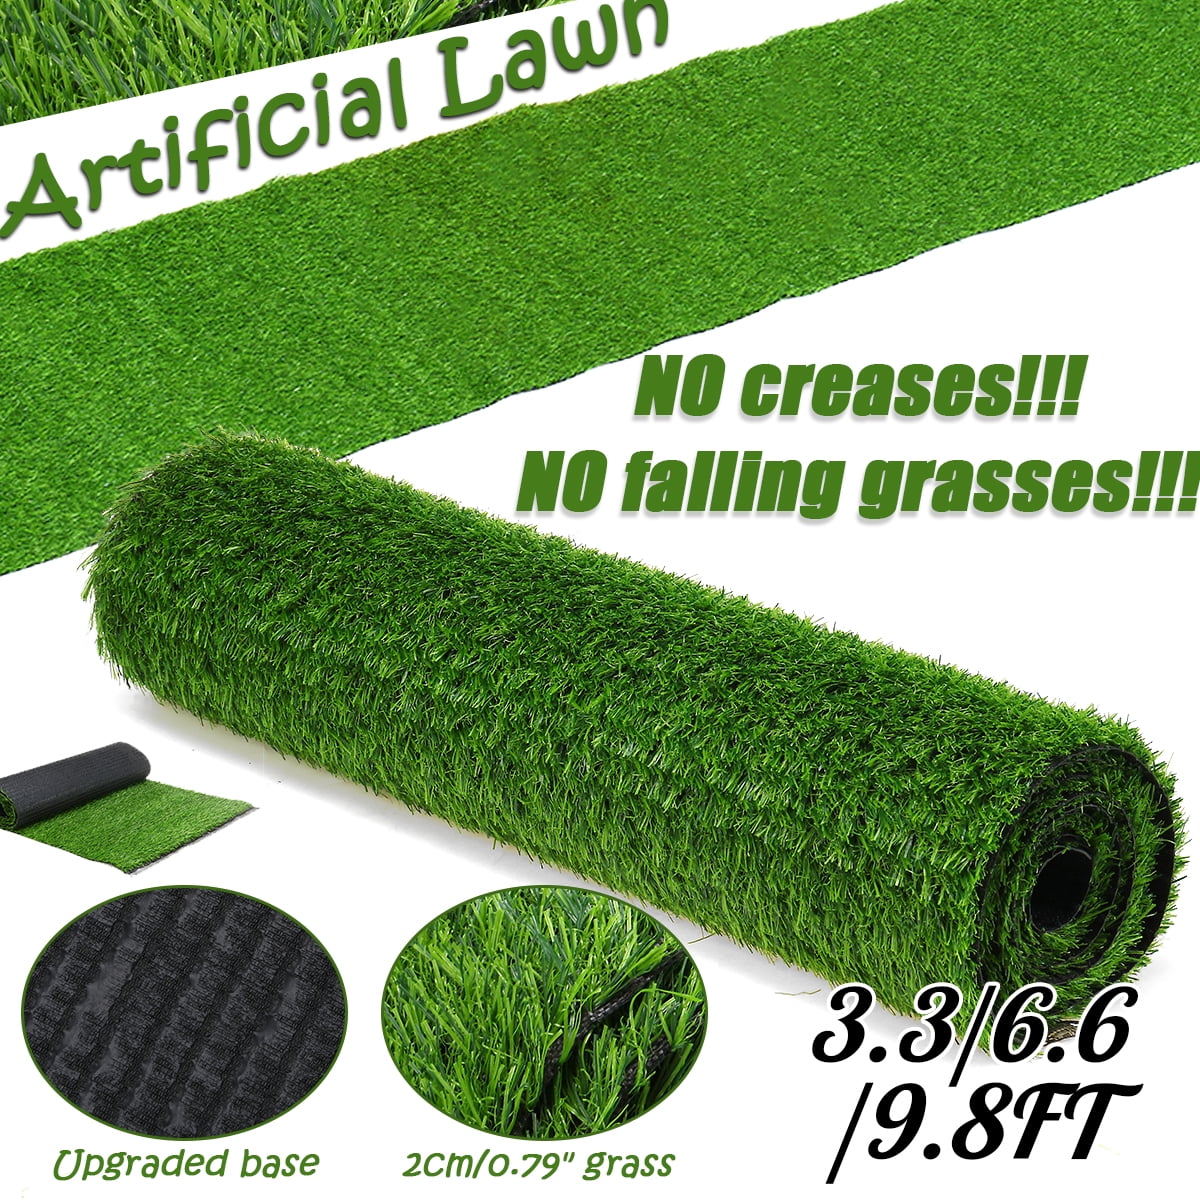 Details about   16x6.6 ft Artificial Grass Floor Mats Synthetic Landscape Lawns Turf Garden 